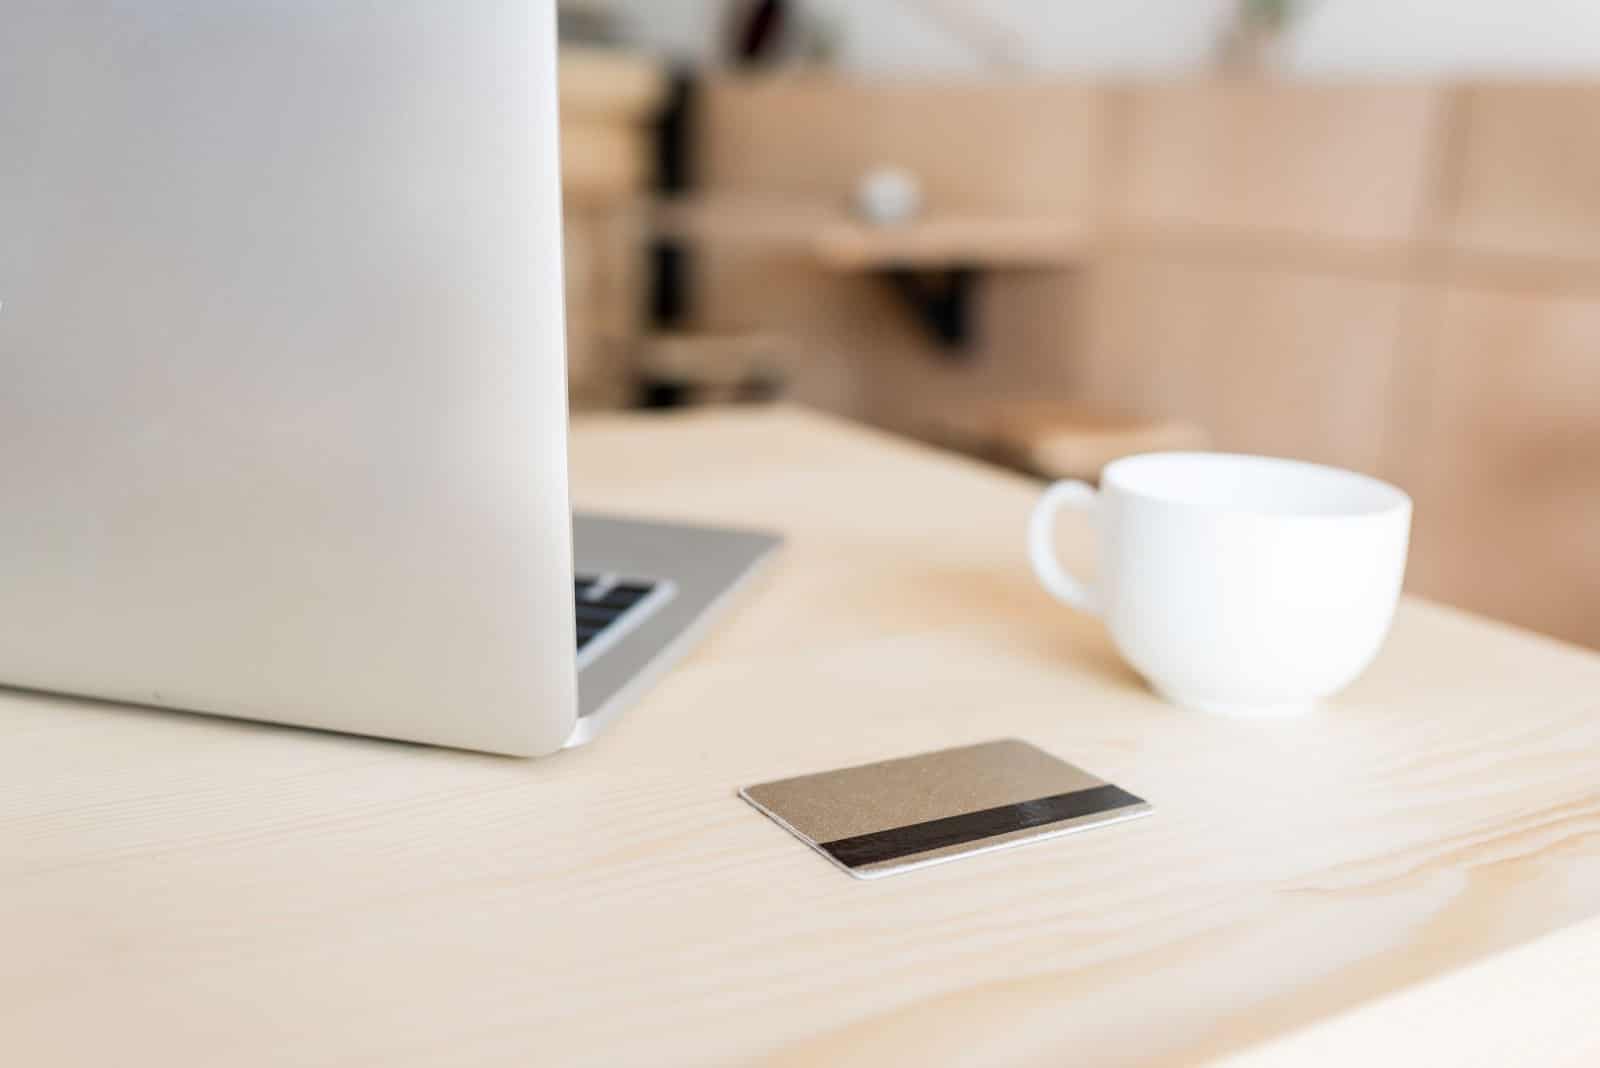 Laptop and coffee mug on desk